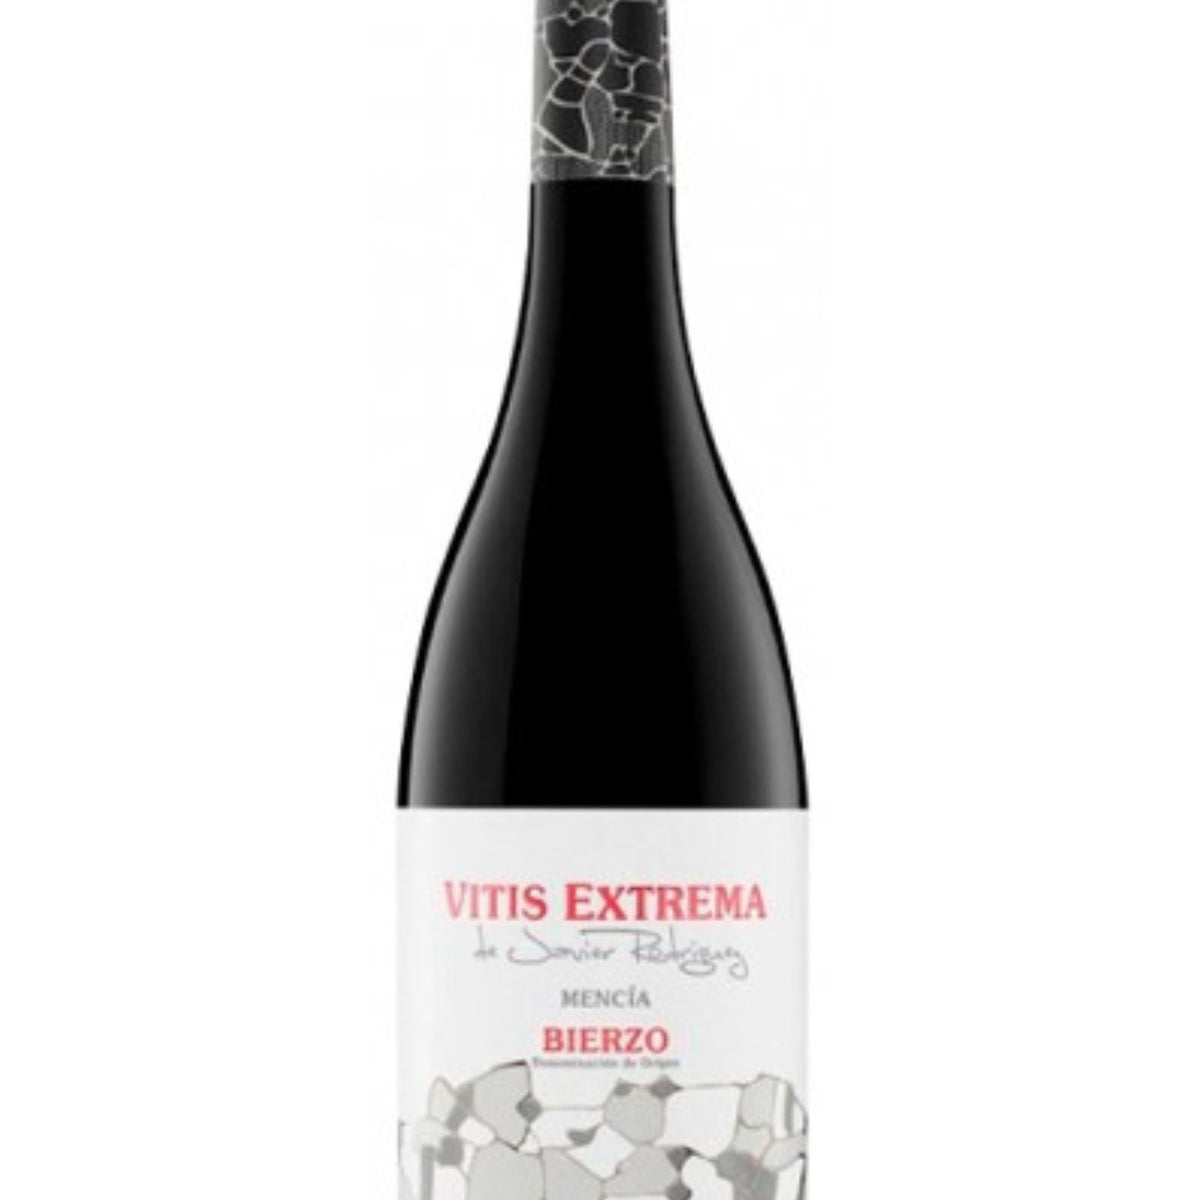 Vitis Extrema, Biezo - 2019